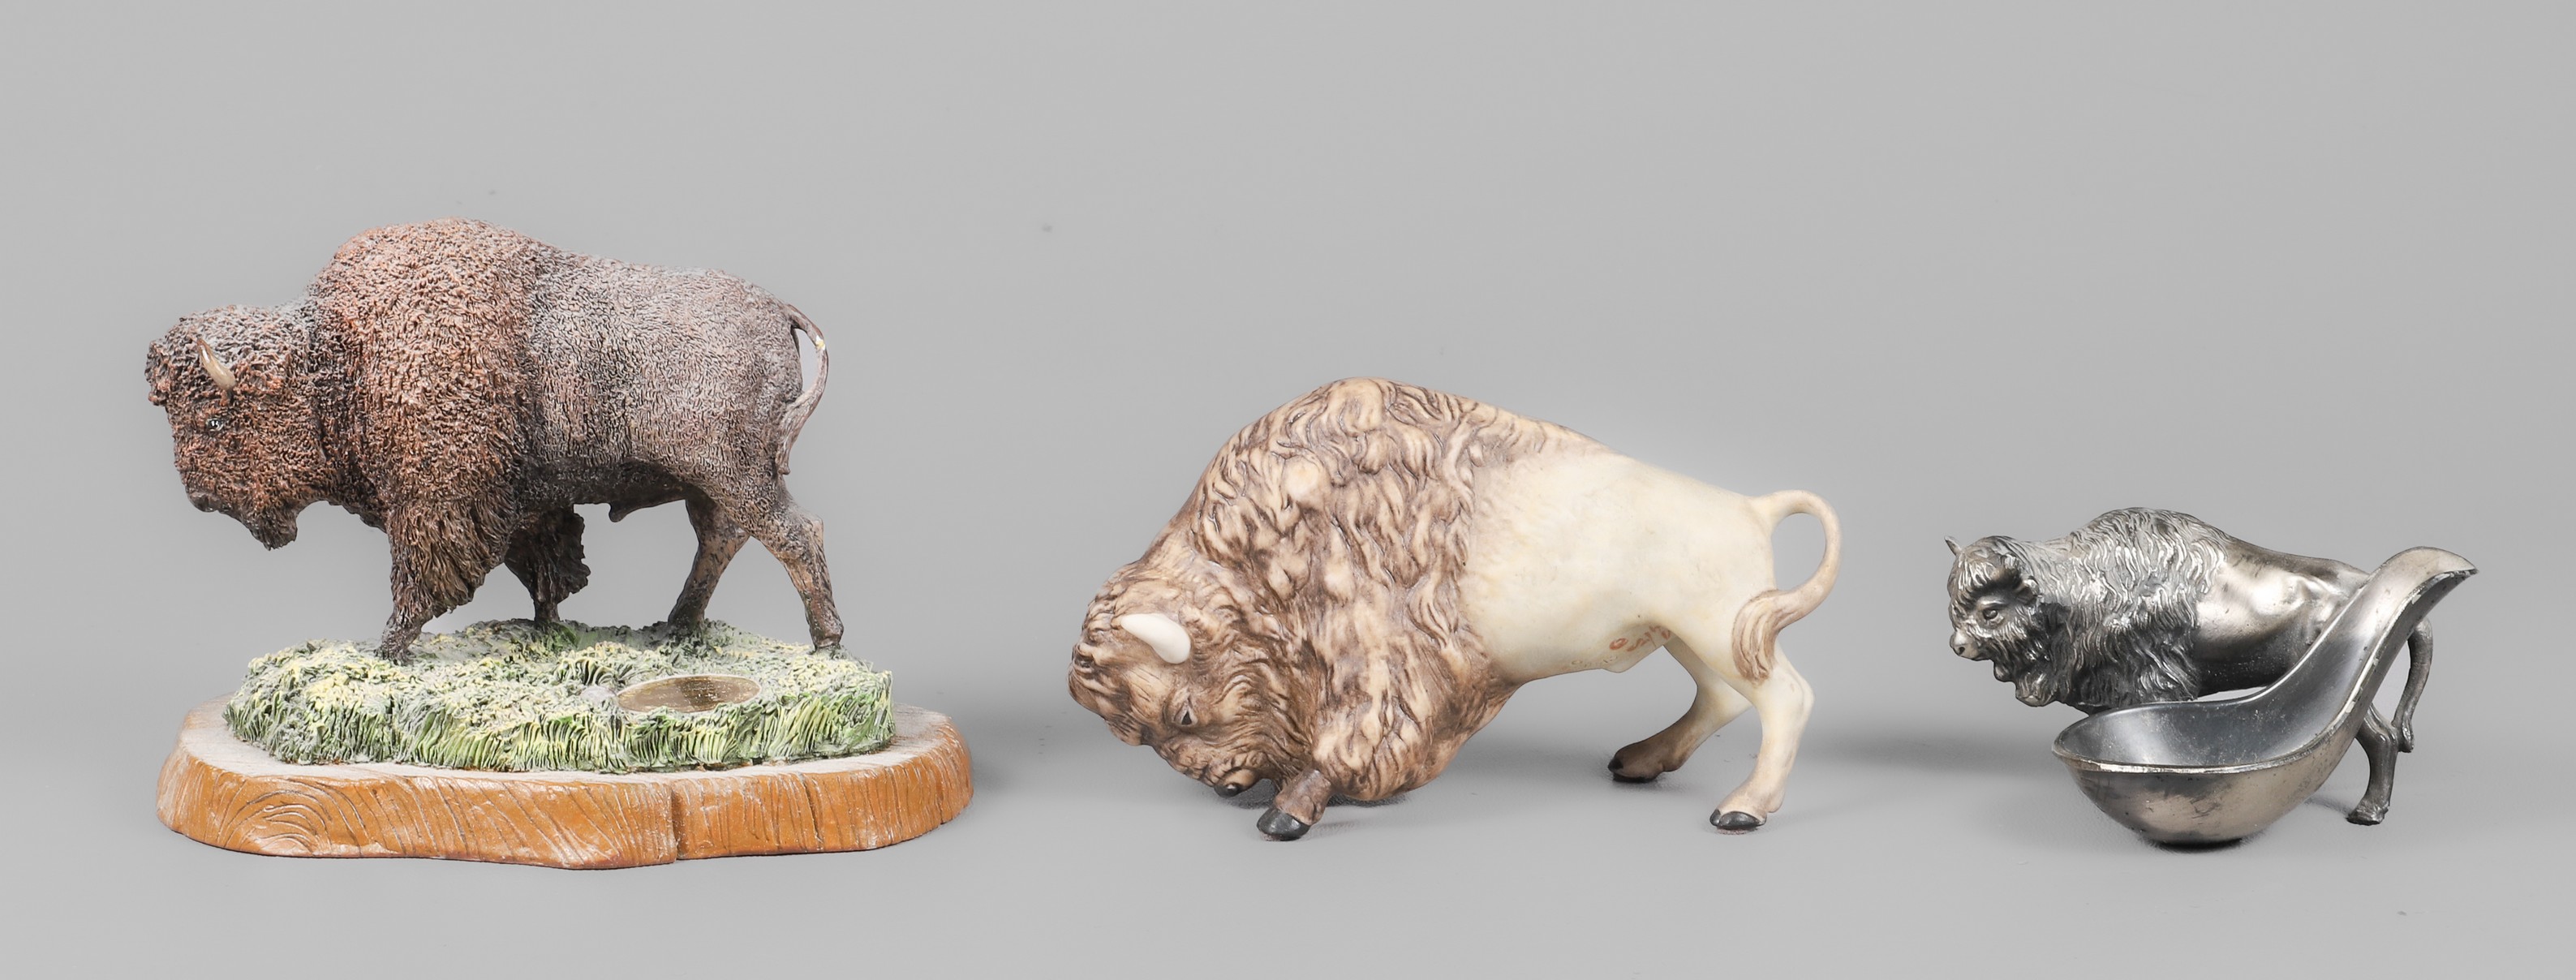 (3) Buffalo figurines, c/o National